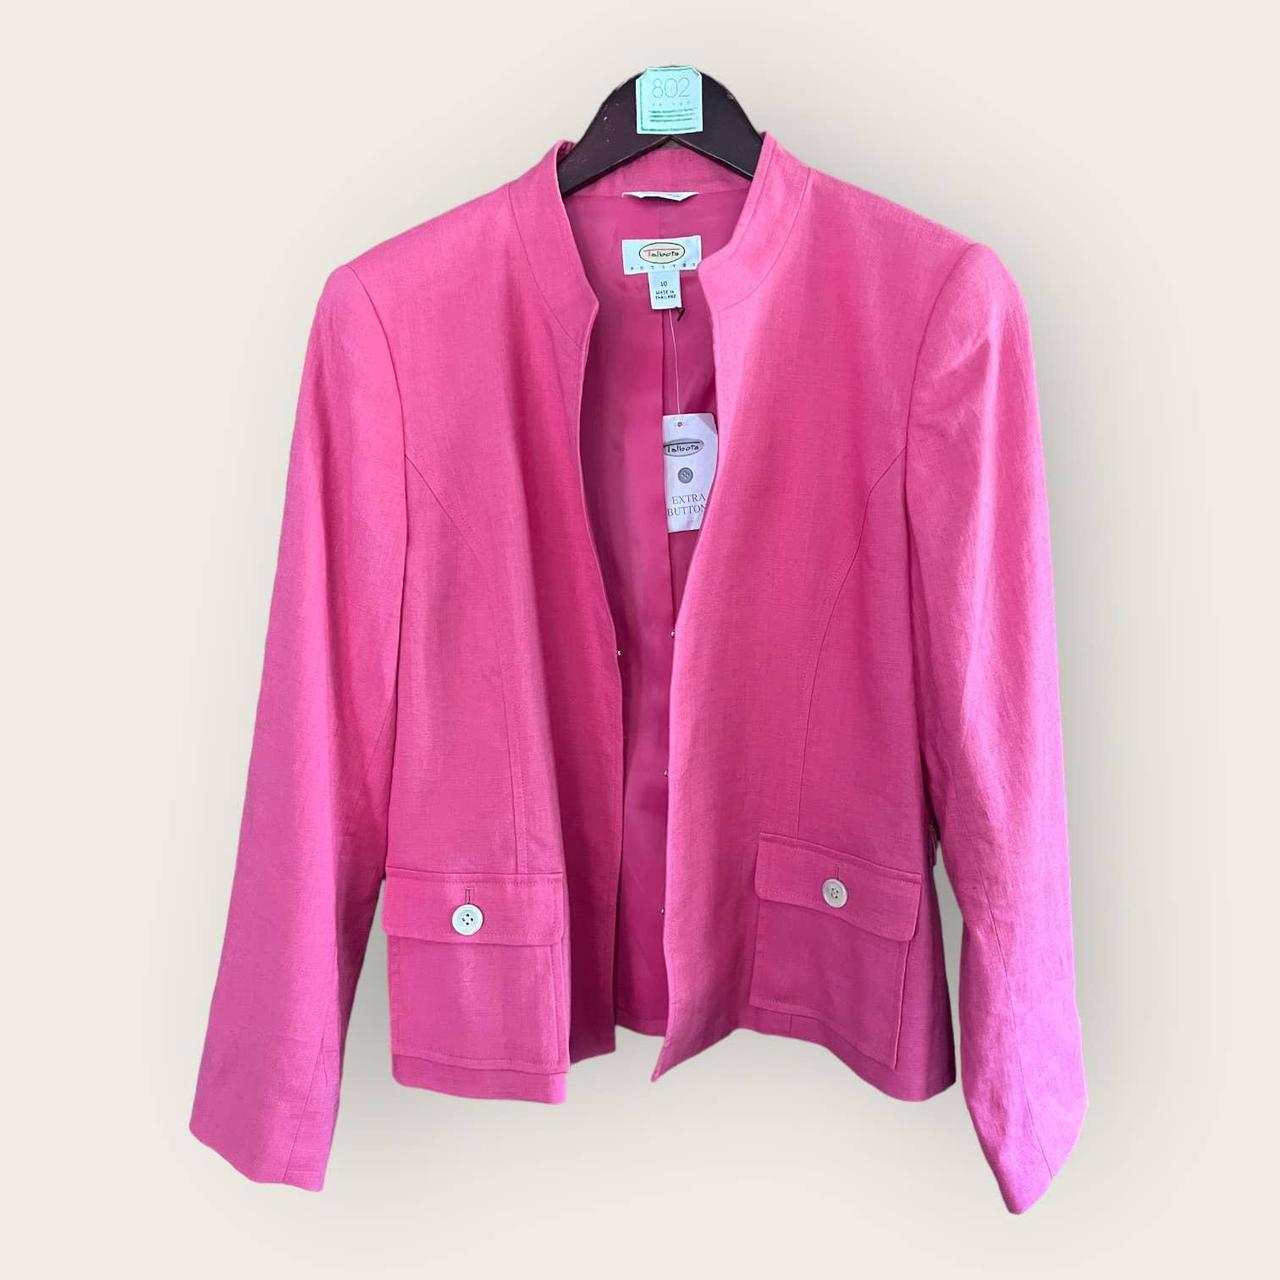 Talbots Petites Pink Jacket Size 10P